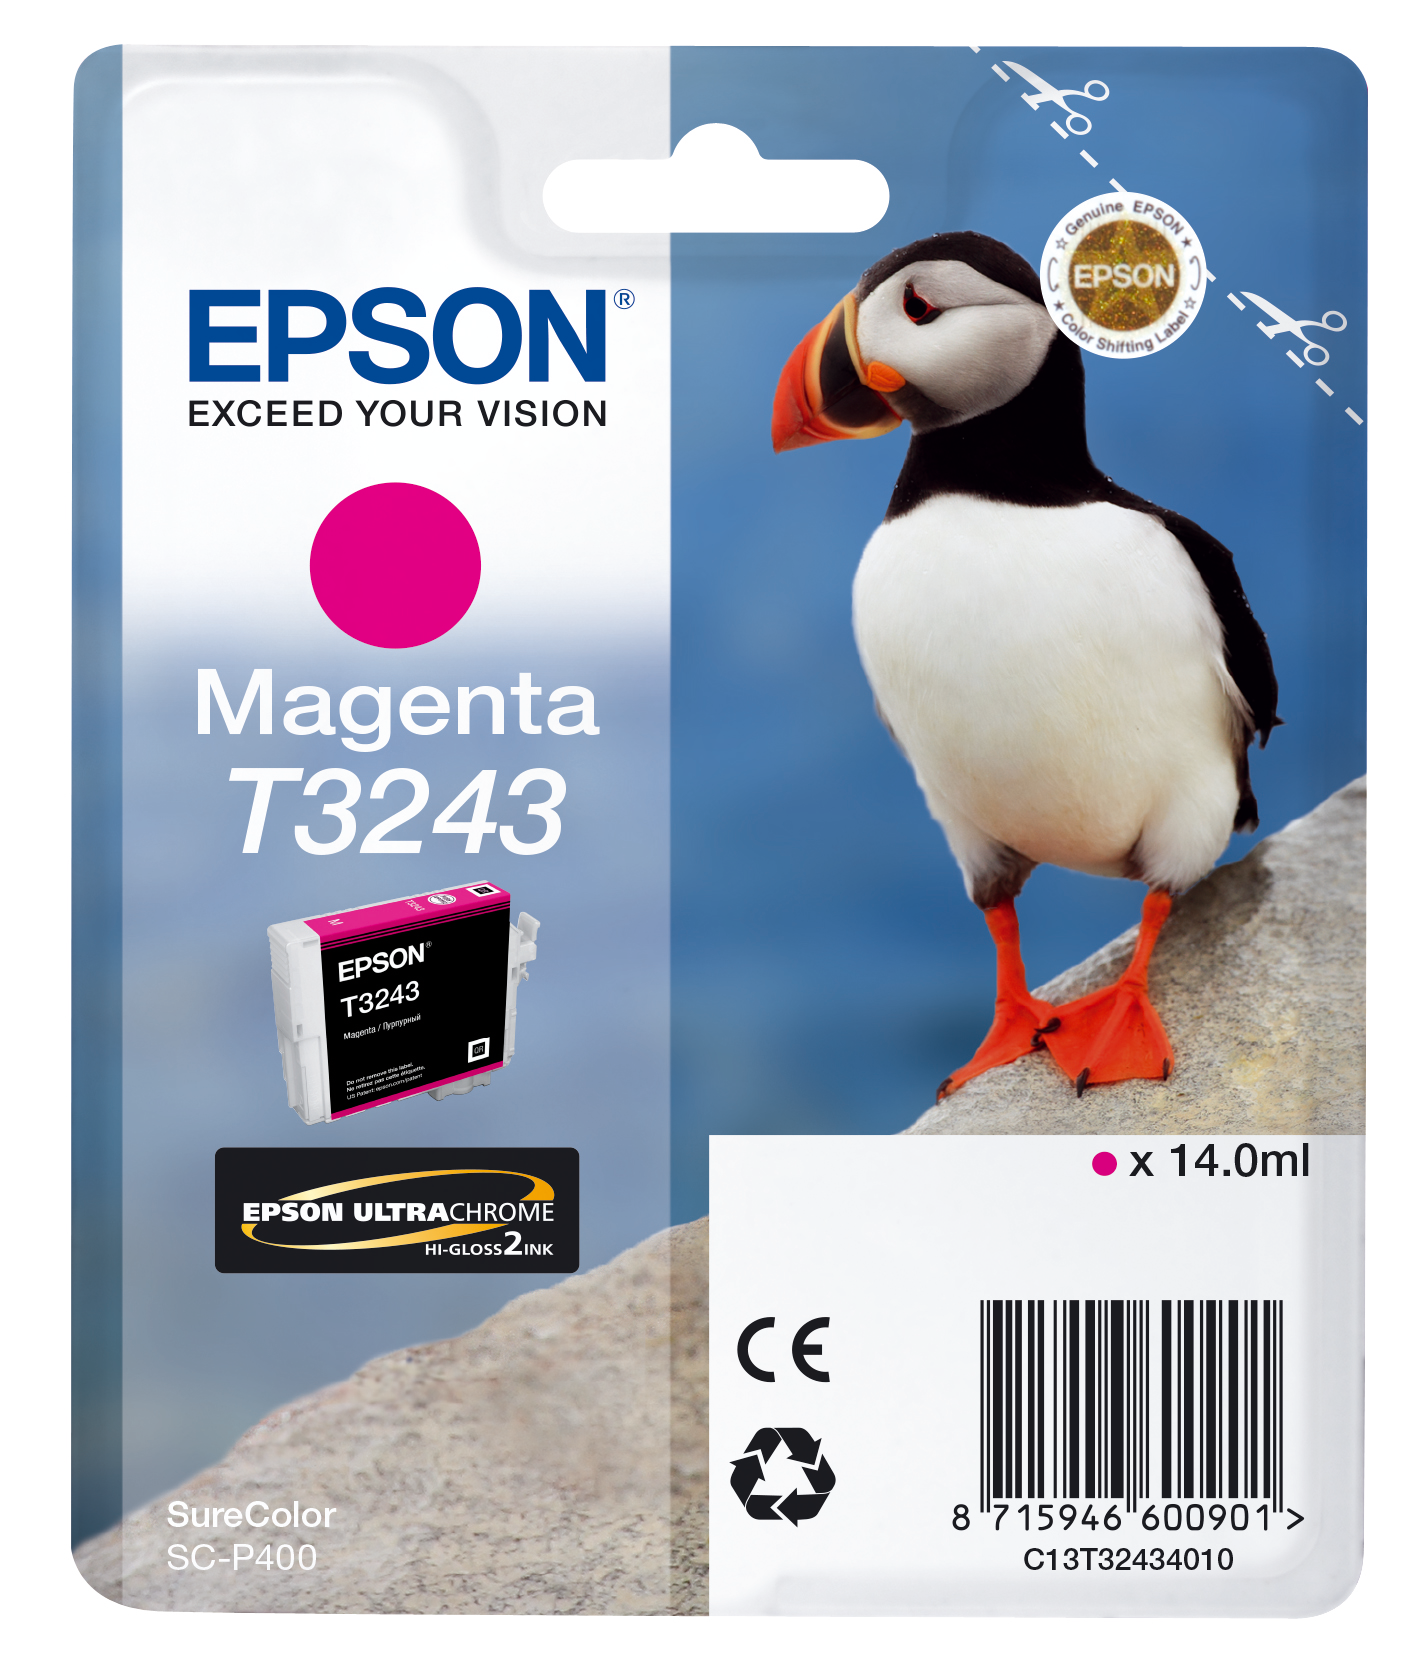 Epson T3243 Magenta single pack / magenta